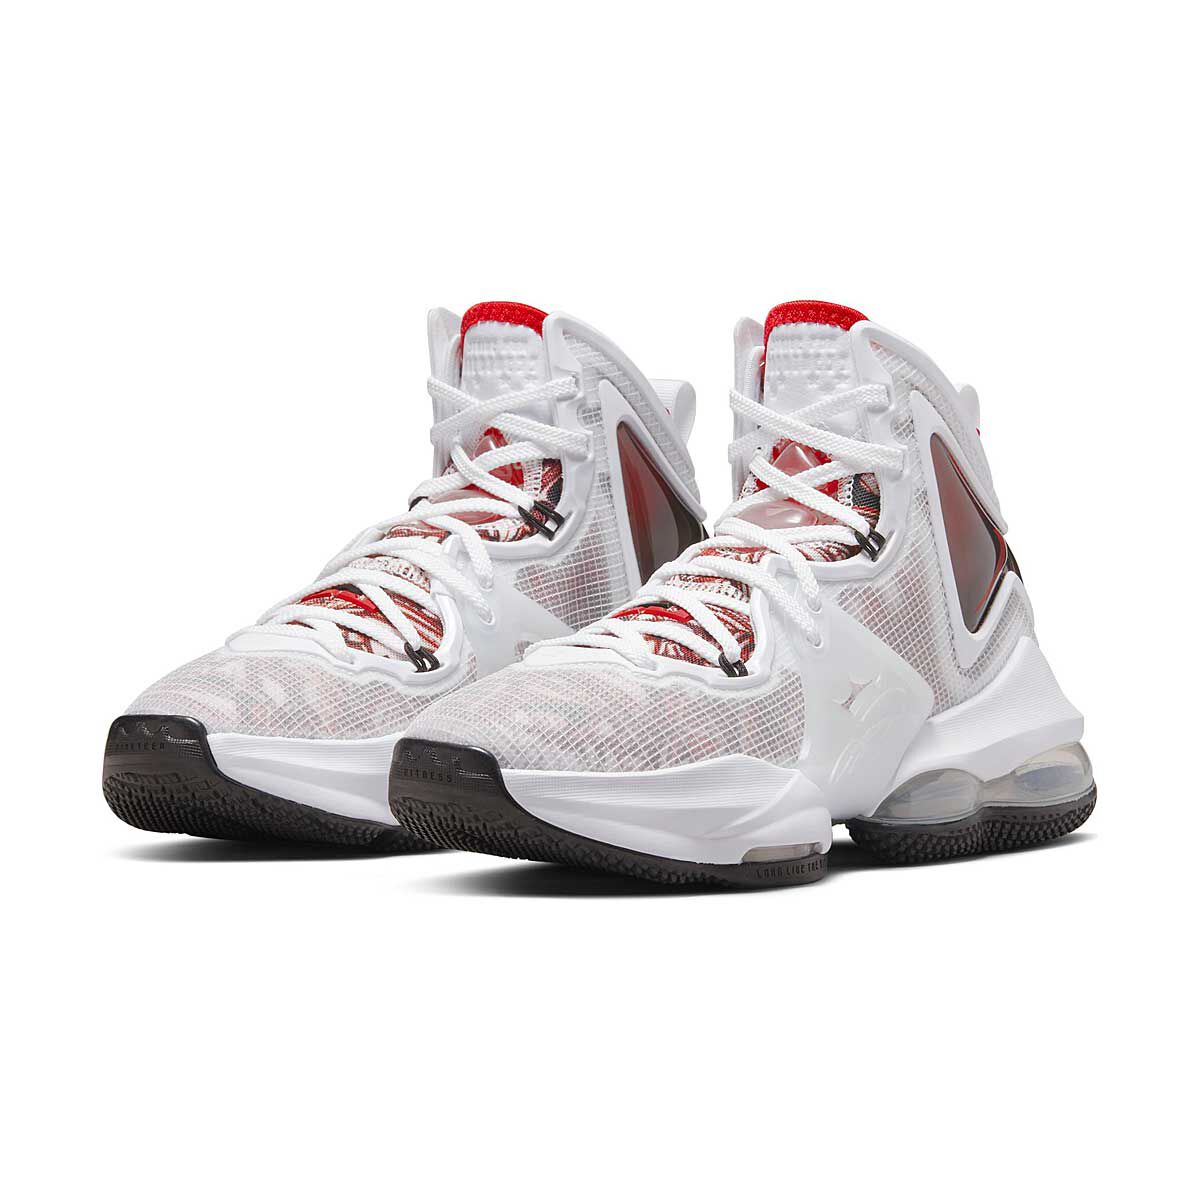 🏀 Get the LEBRON 19 (GS) basketball shoe - white/university red | KICKZ